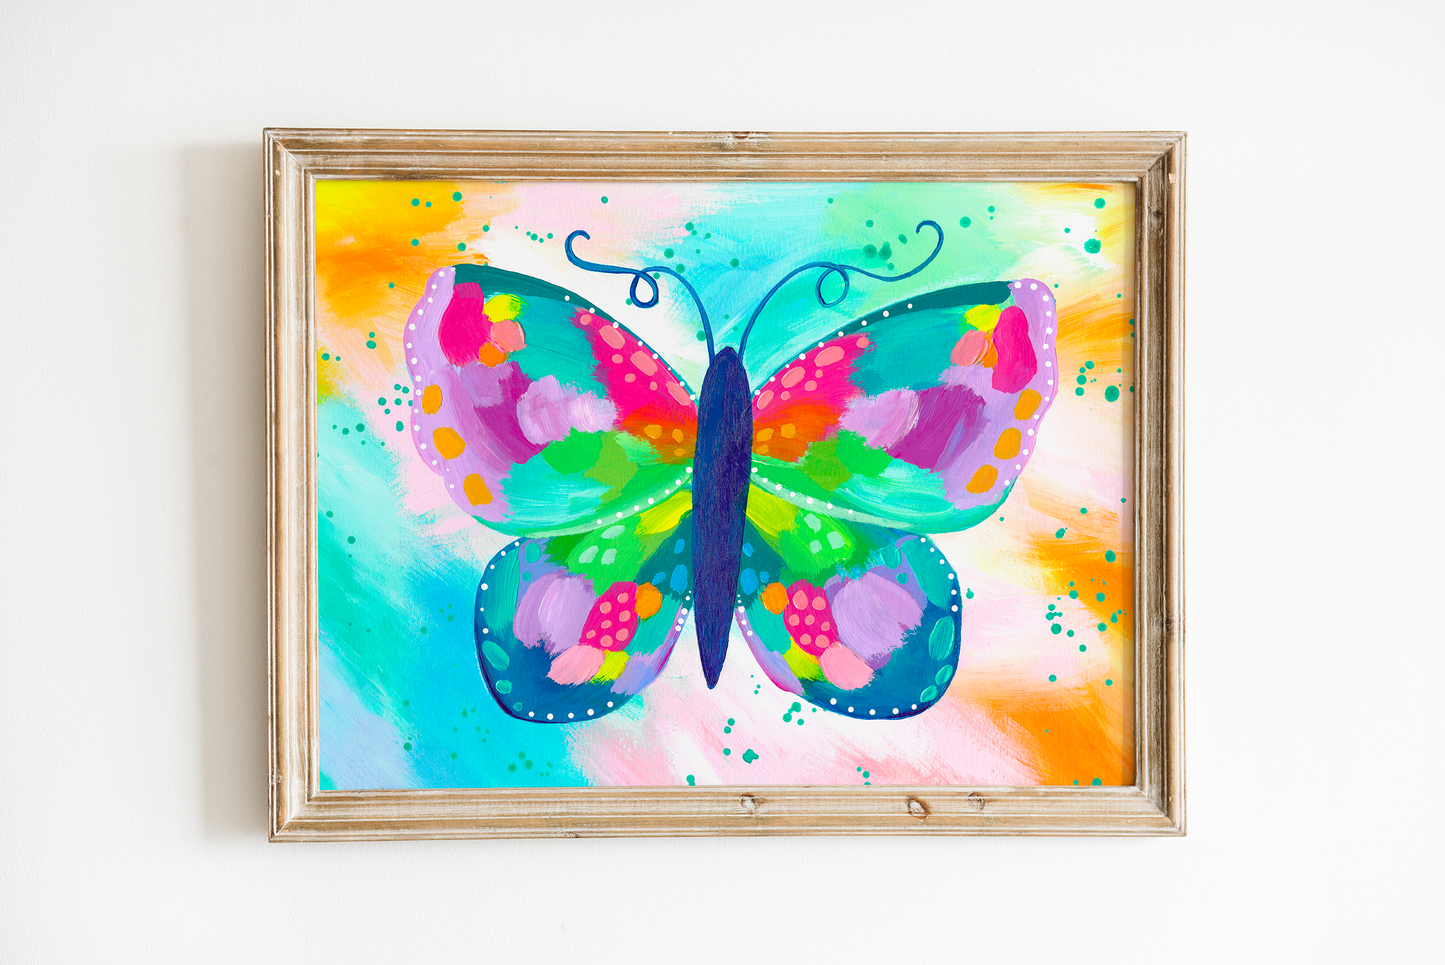 "Strong, Beautiful, Brave Butterfly" Bethany Joy Art Print